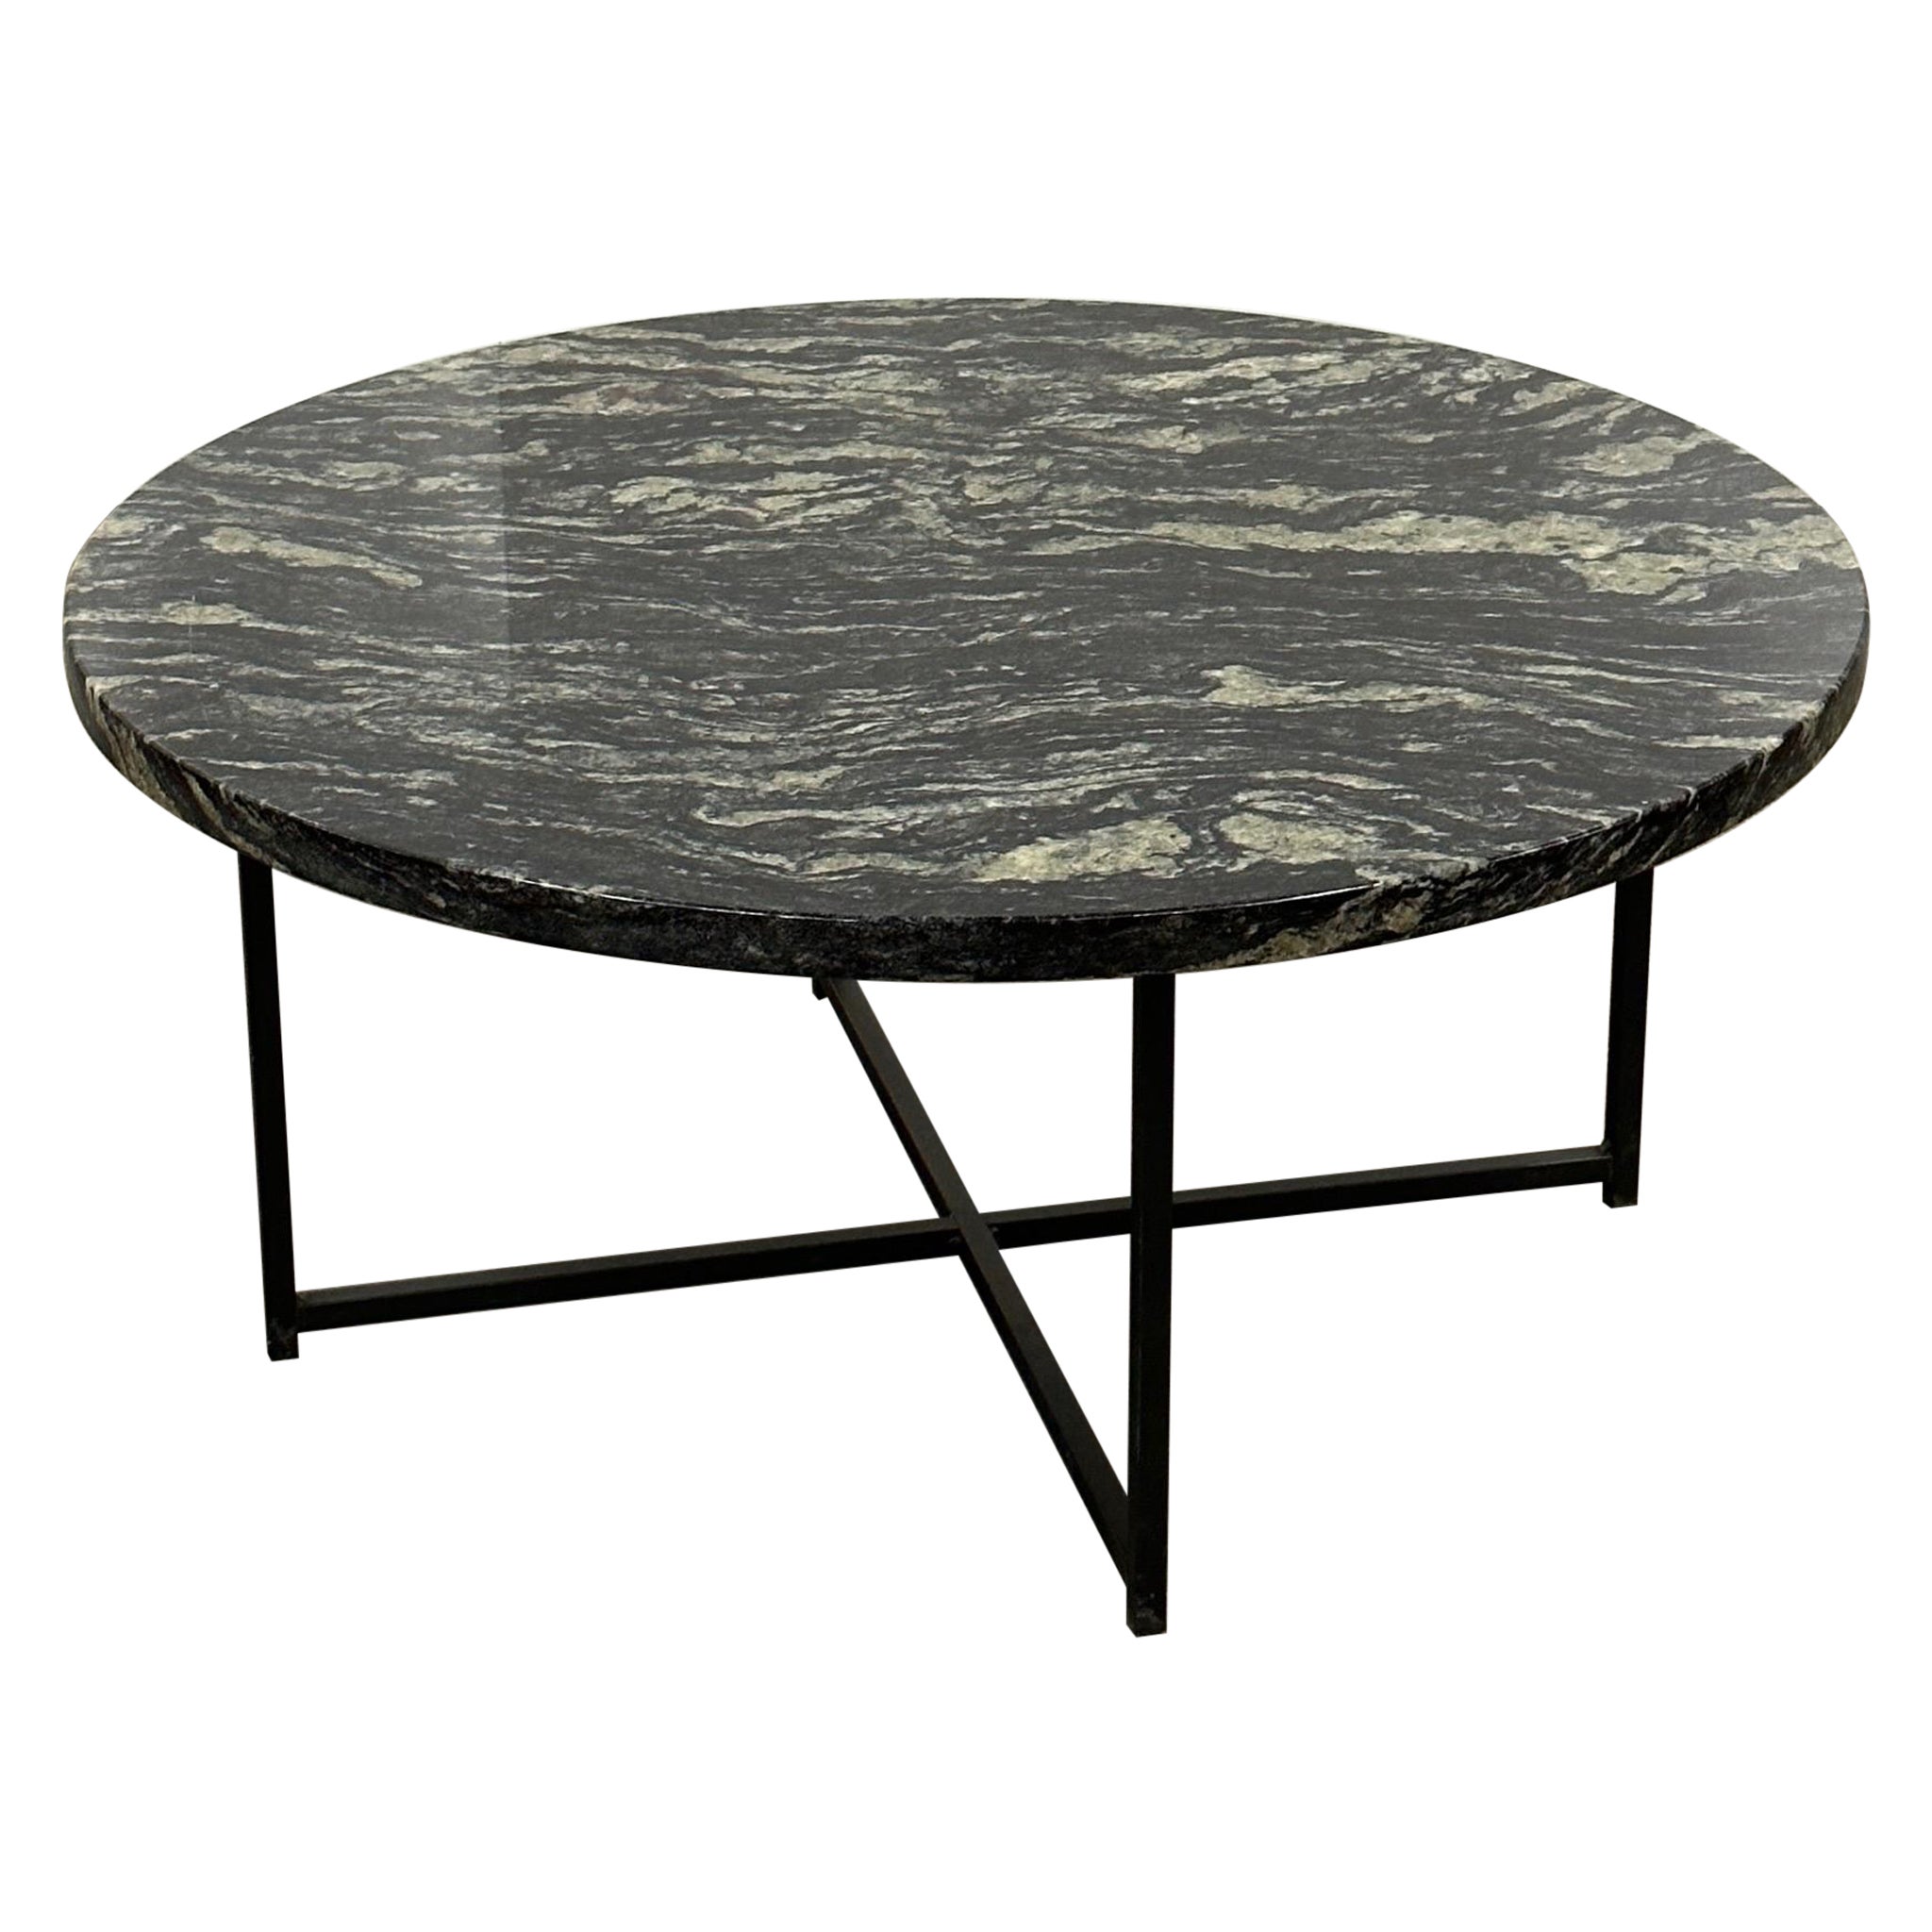 Stone Circular Coffee Table For Sale